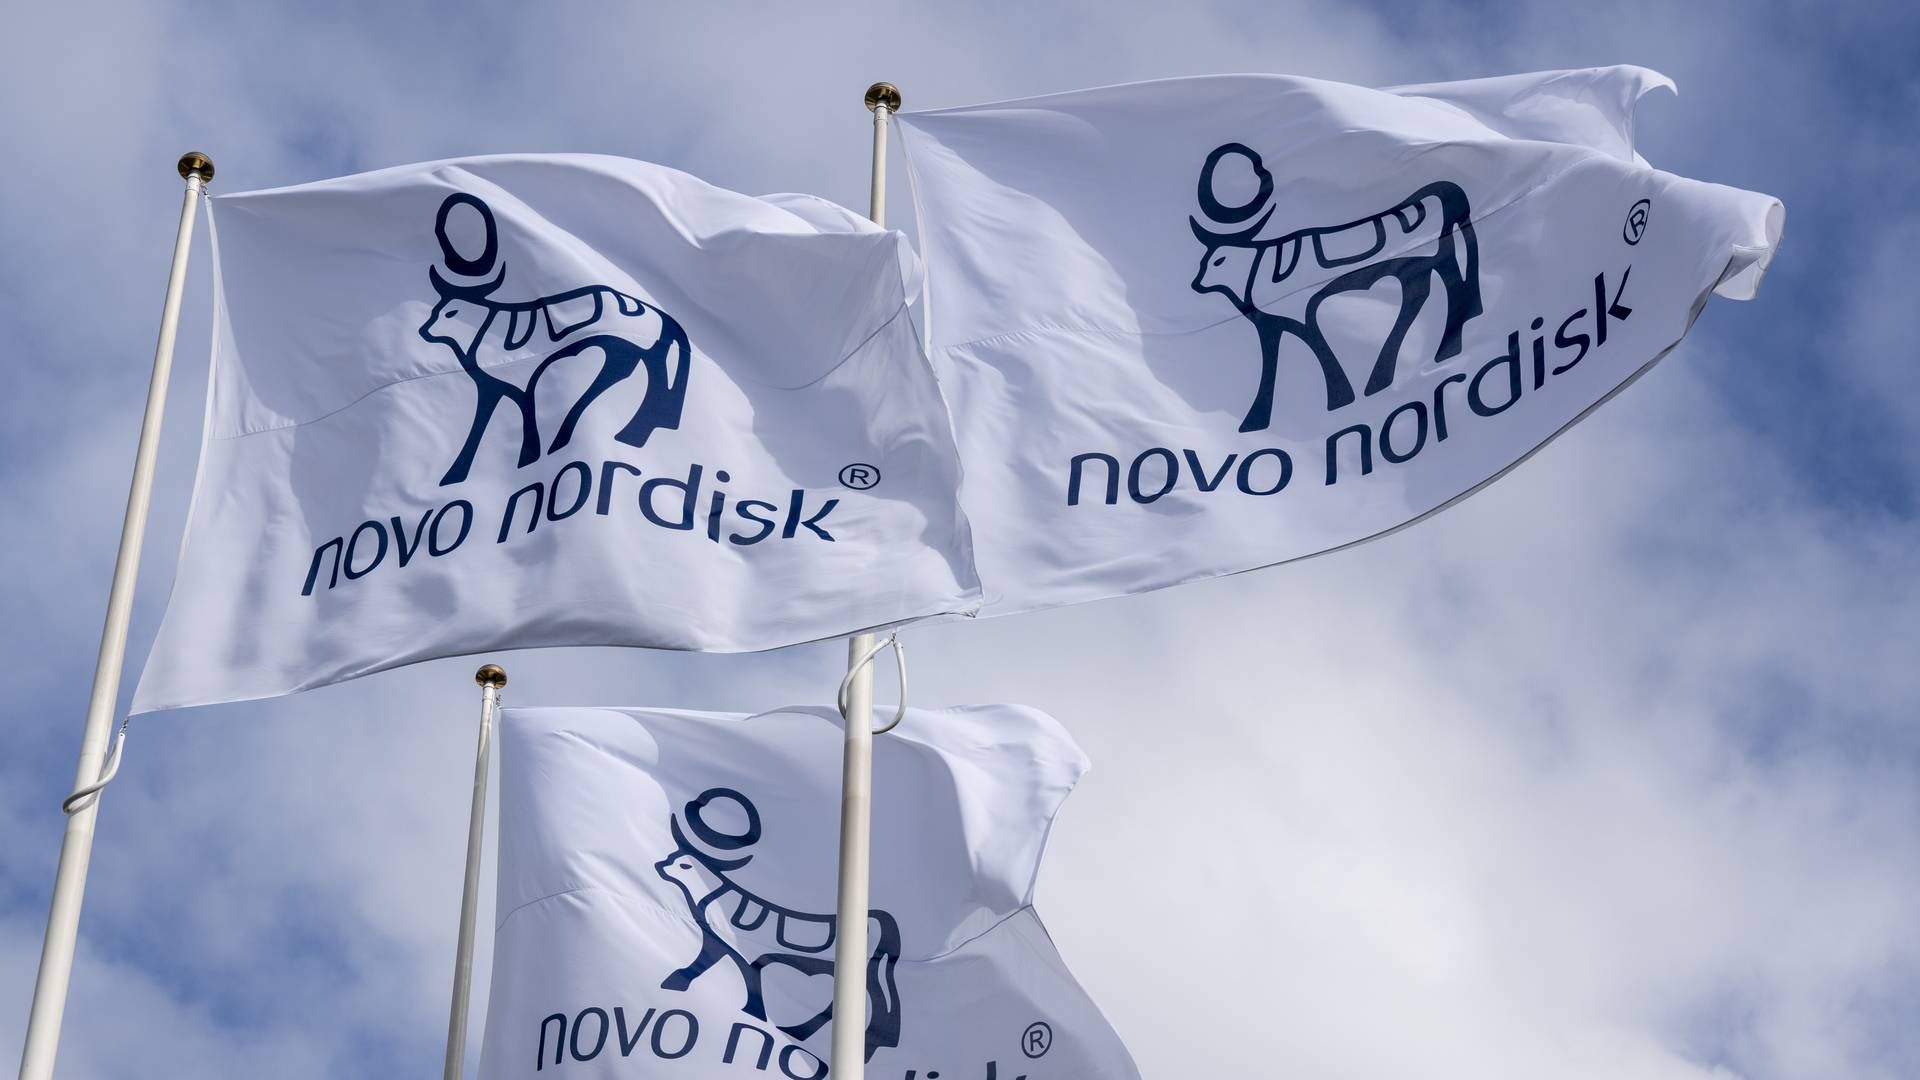 Photo: Novo Nordisk / PR